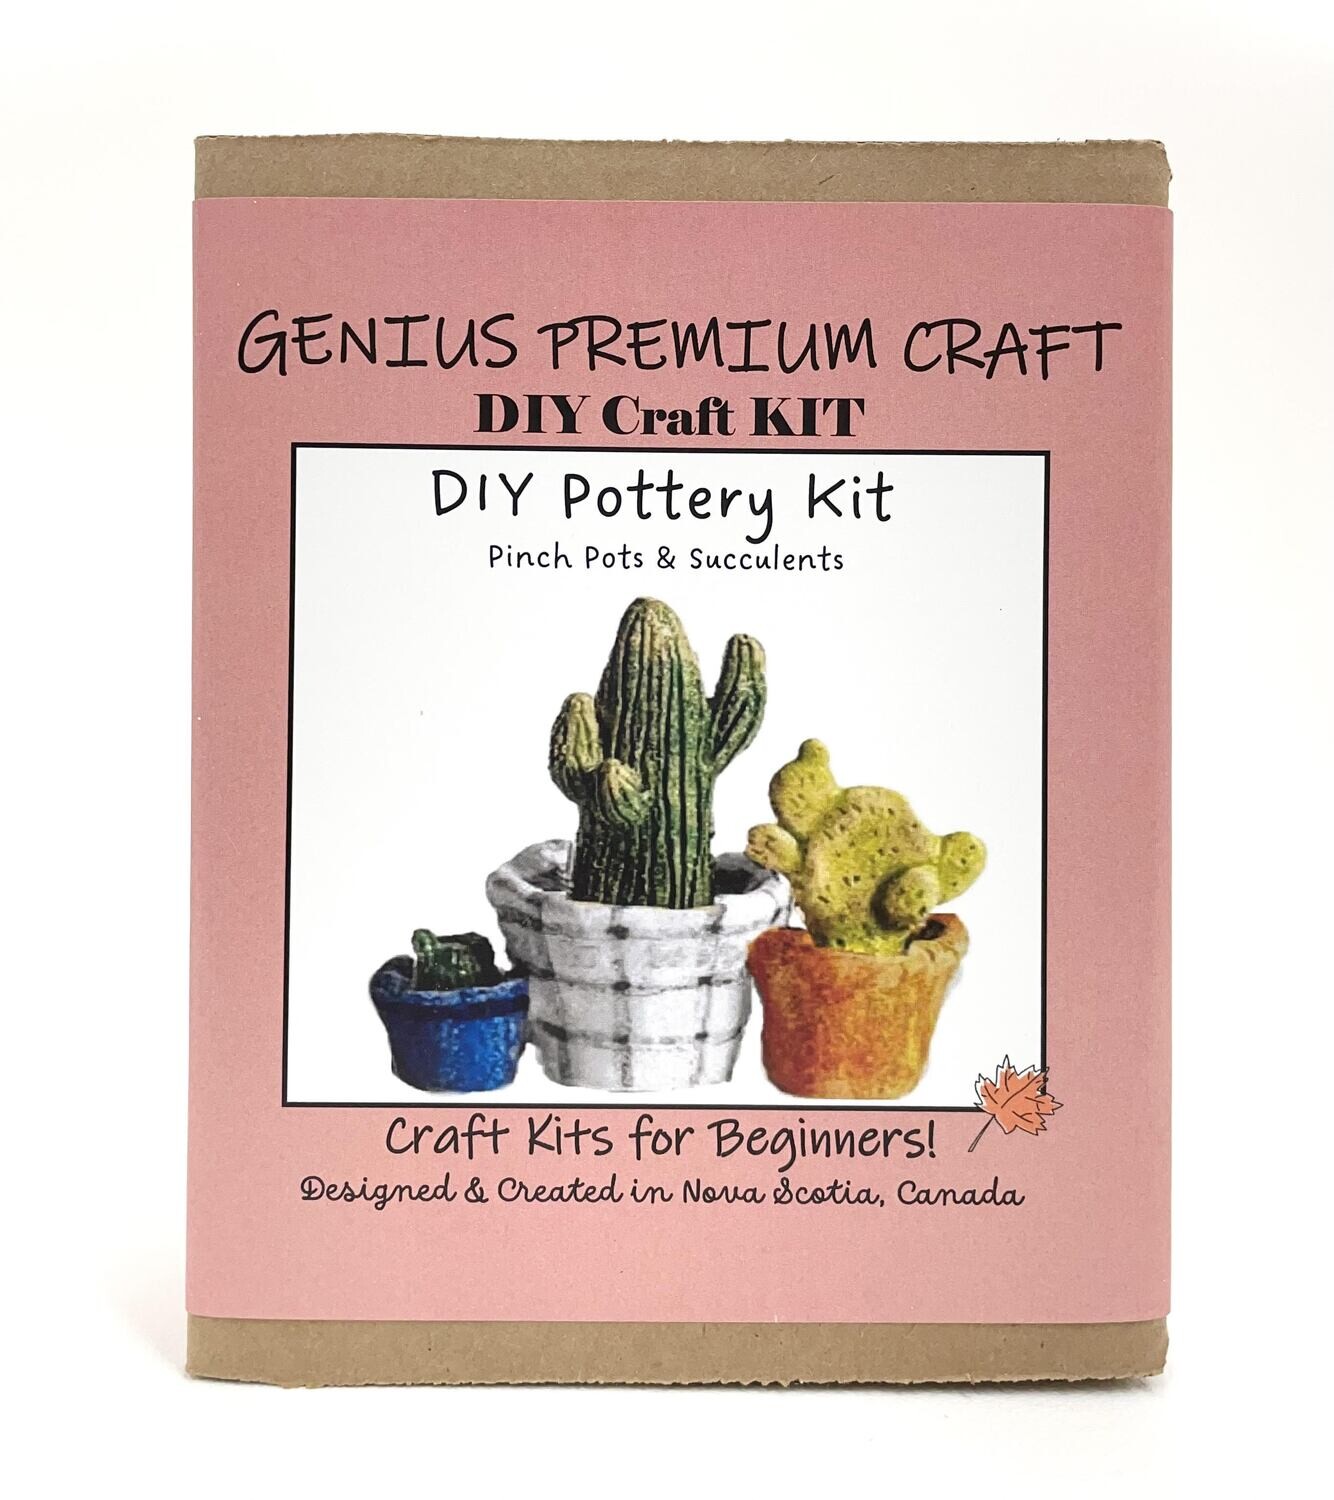 DIY Pottery Kit - Cacti and Pots - Genius Premium Craft